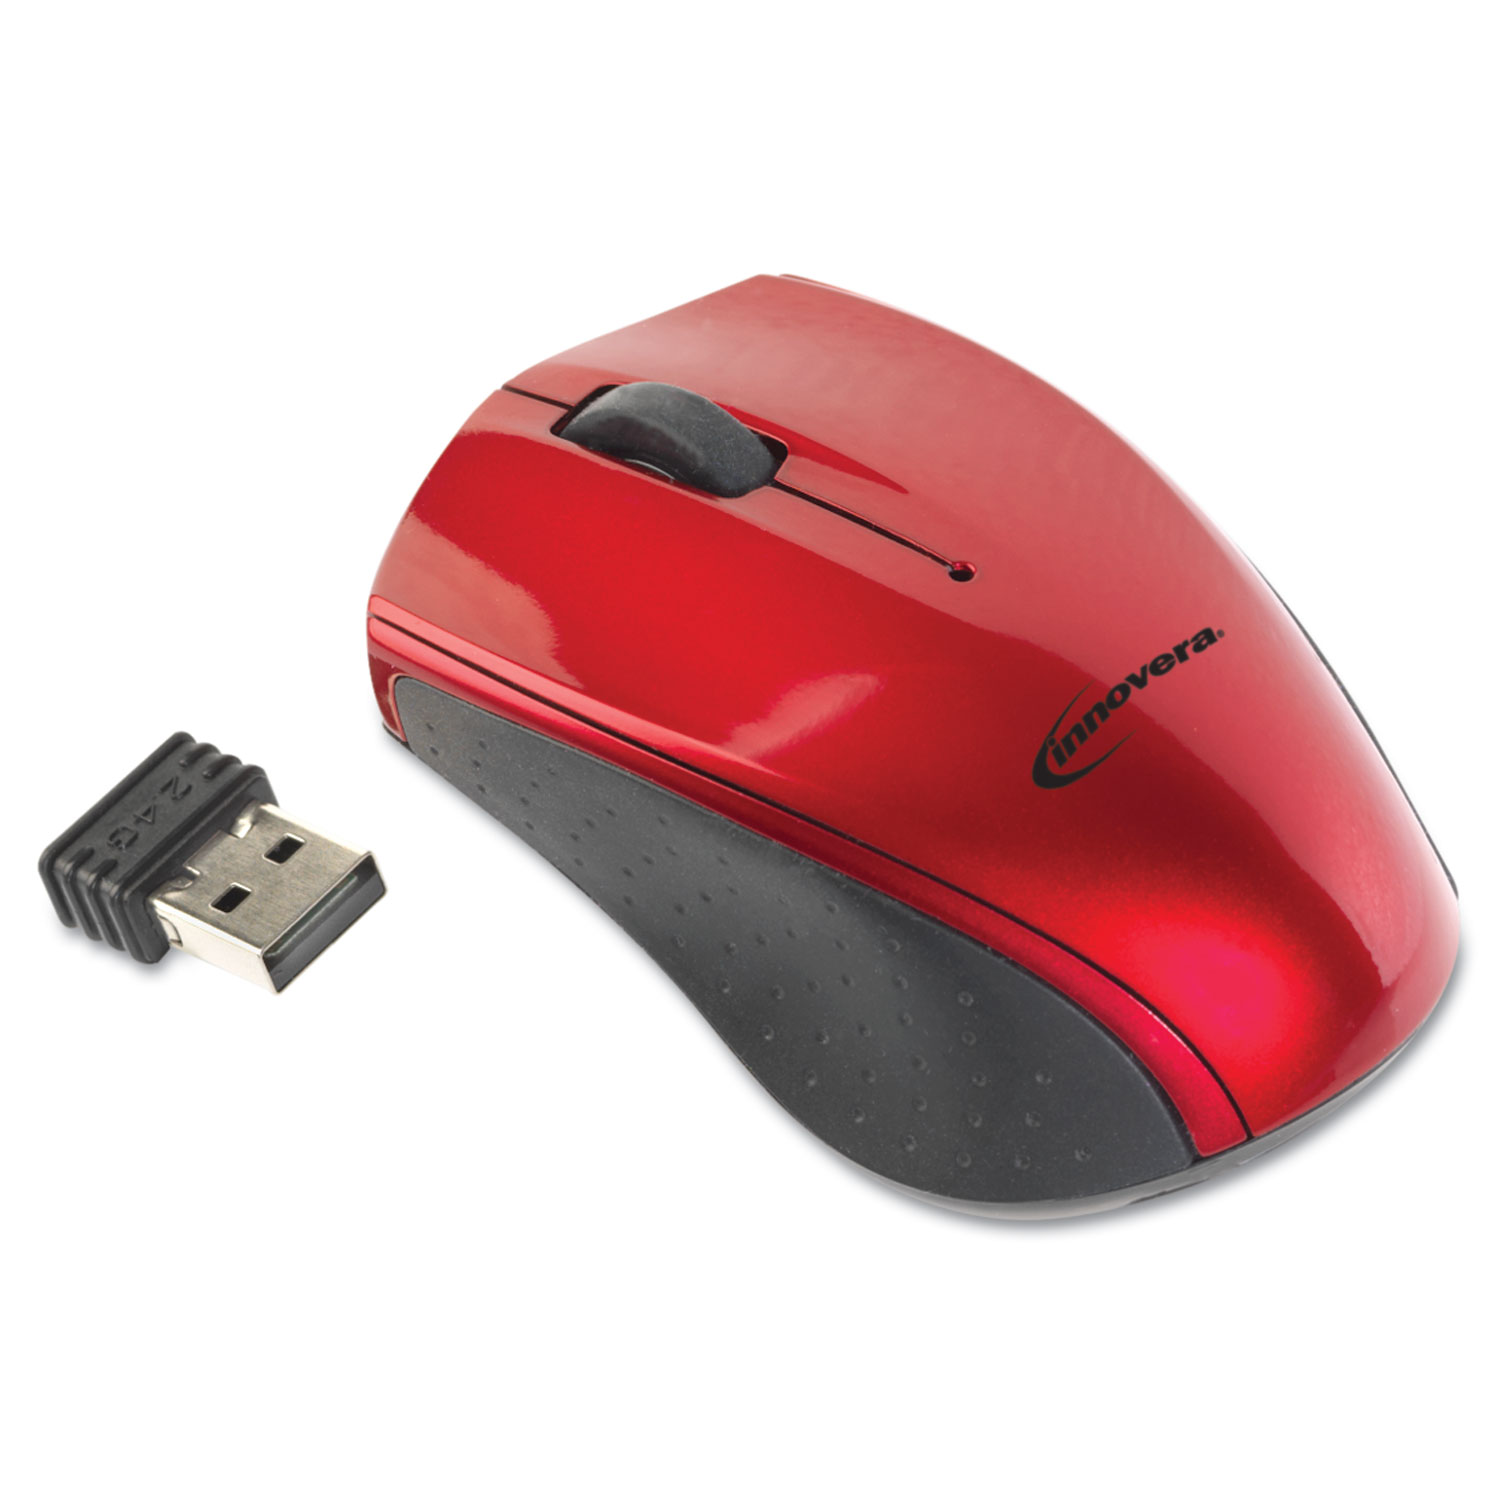 Bluetooth мышь usb. Мышь Logitech m171 Red Optical Mouse Wireless. Logitech m171 Red Black. Faison мышь беспроводная m6. Мышь беспроводная Logitech m171 оптическая Black/Red 062870.